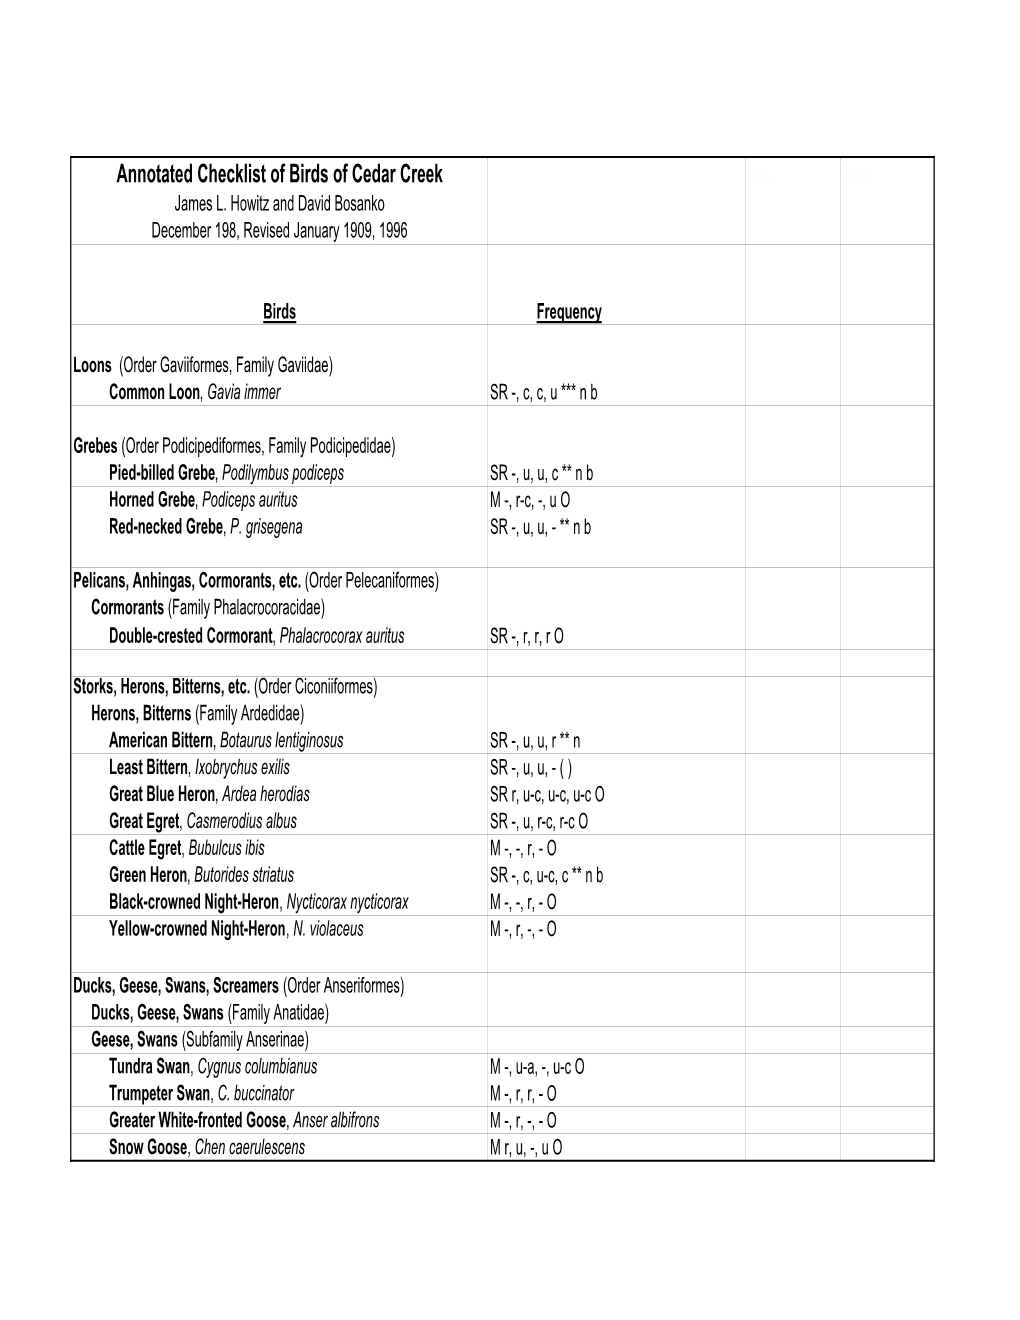 Print Version of Annotated Checklist (PDF)